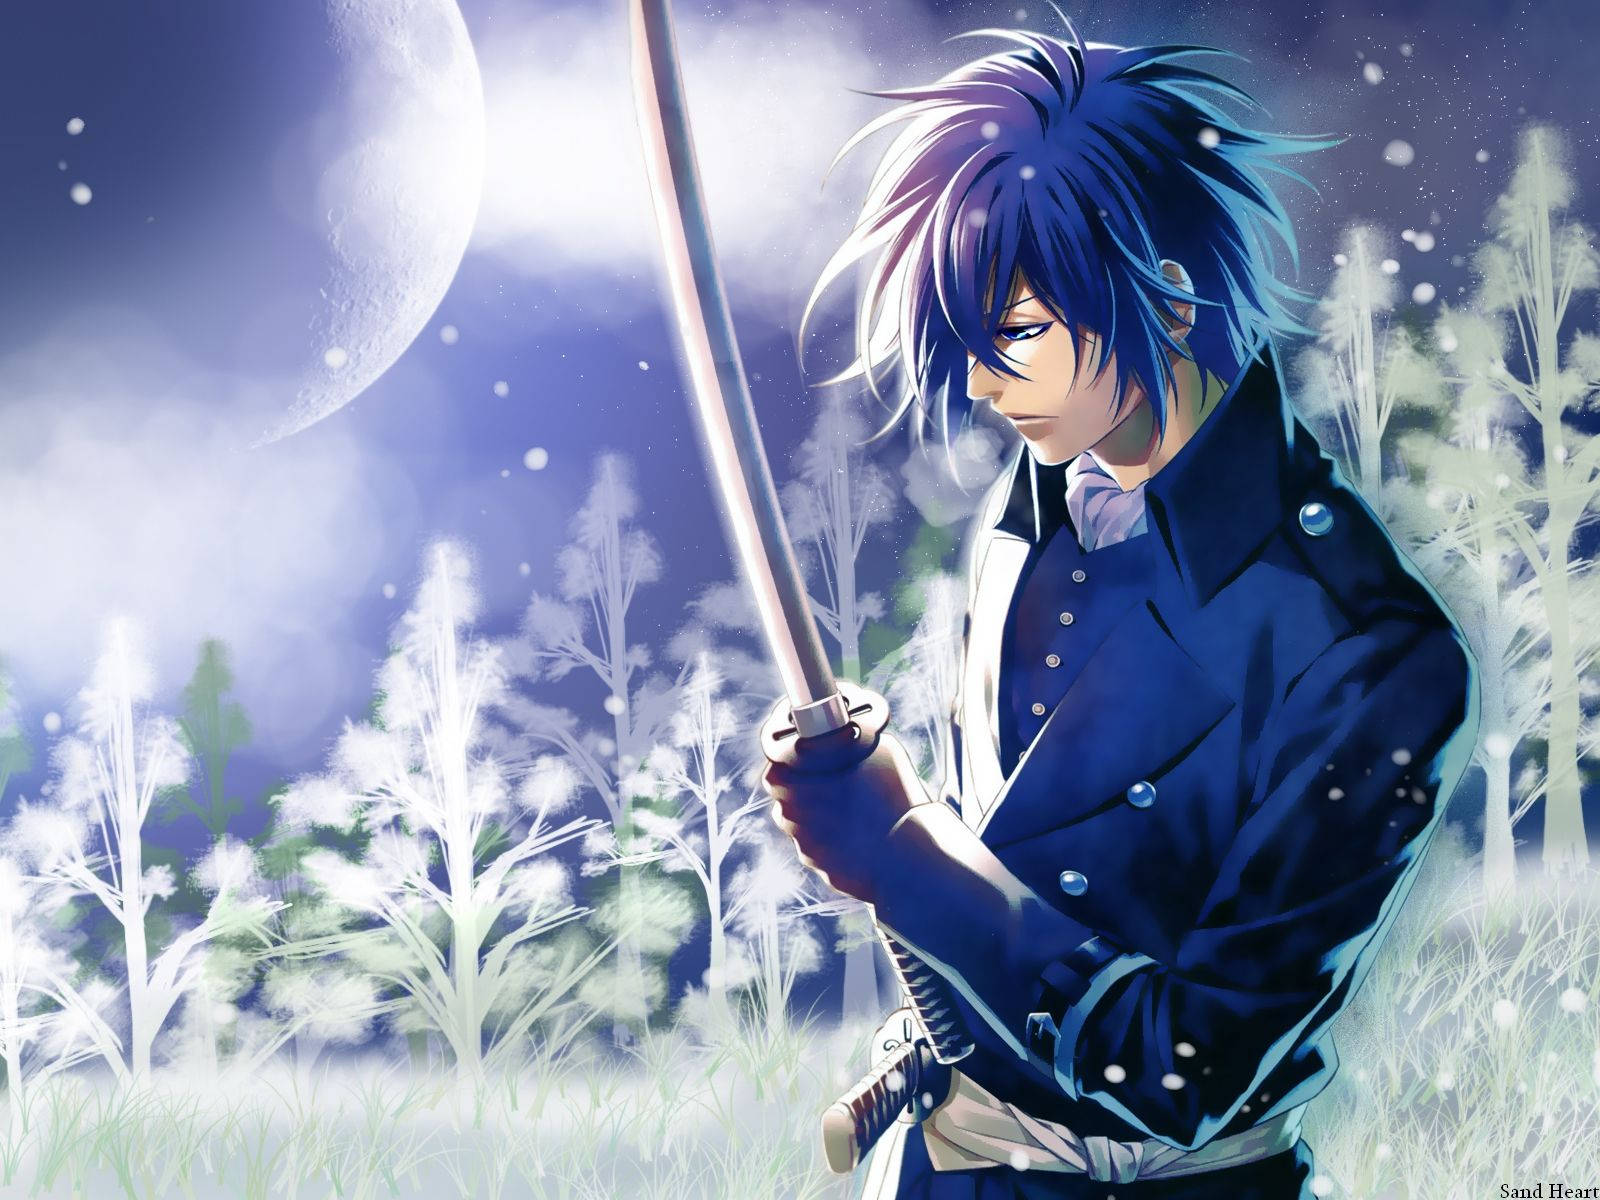 A Sad Anime Blue Boy Sitting in the Moonlight Wallpaper